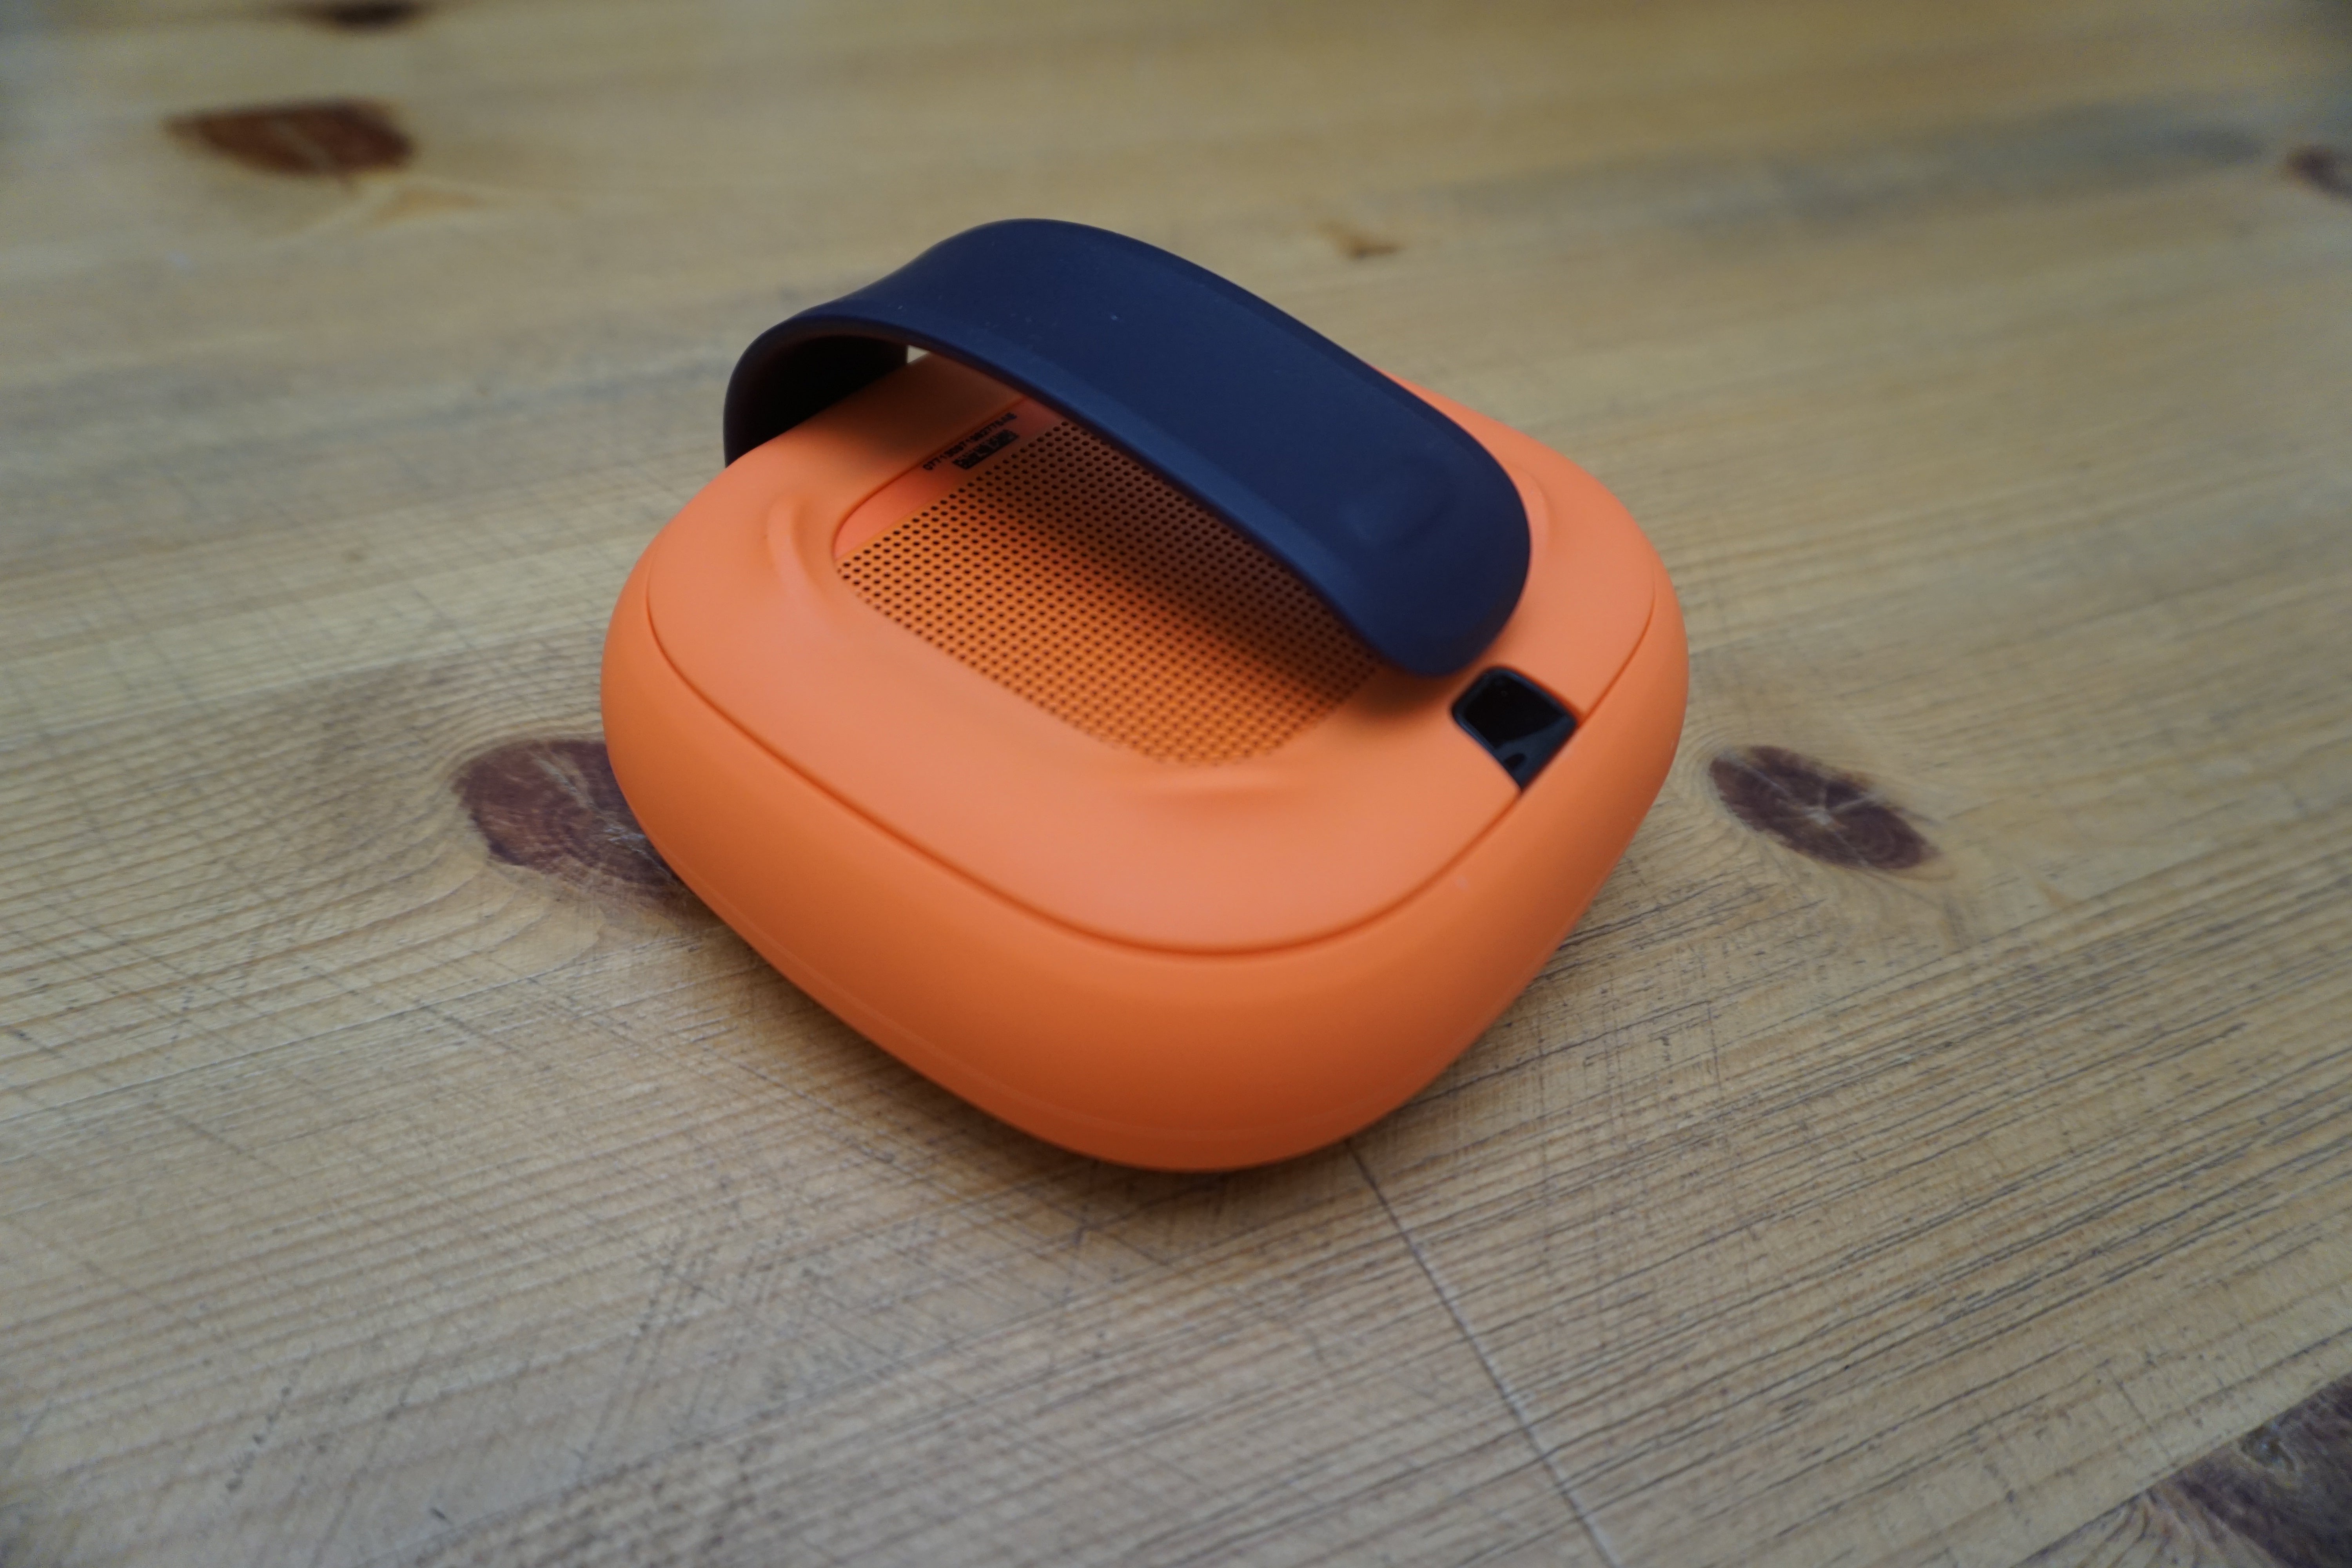 Bose SoundLink Micro speaker on wooden surface.